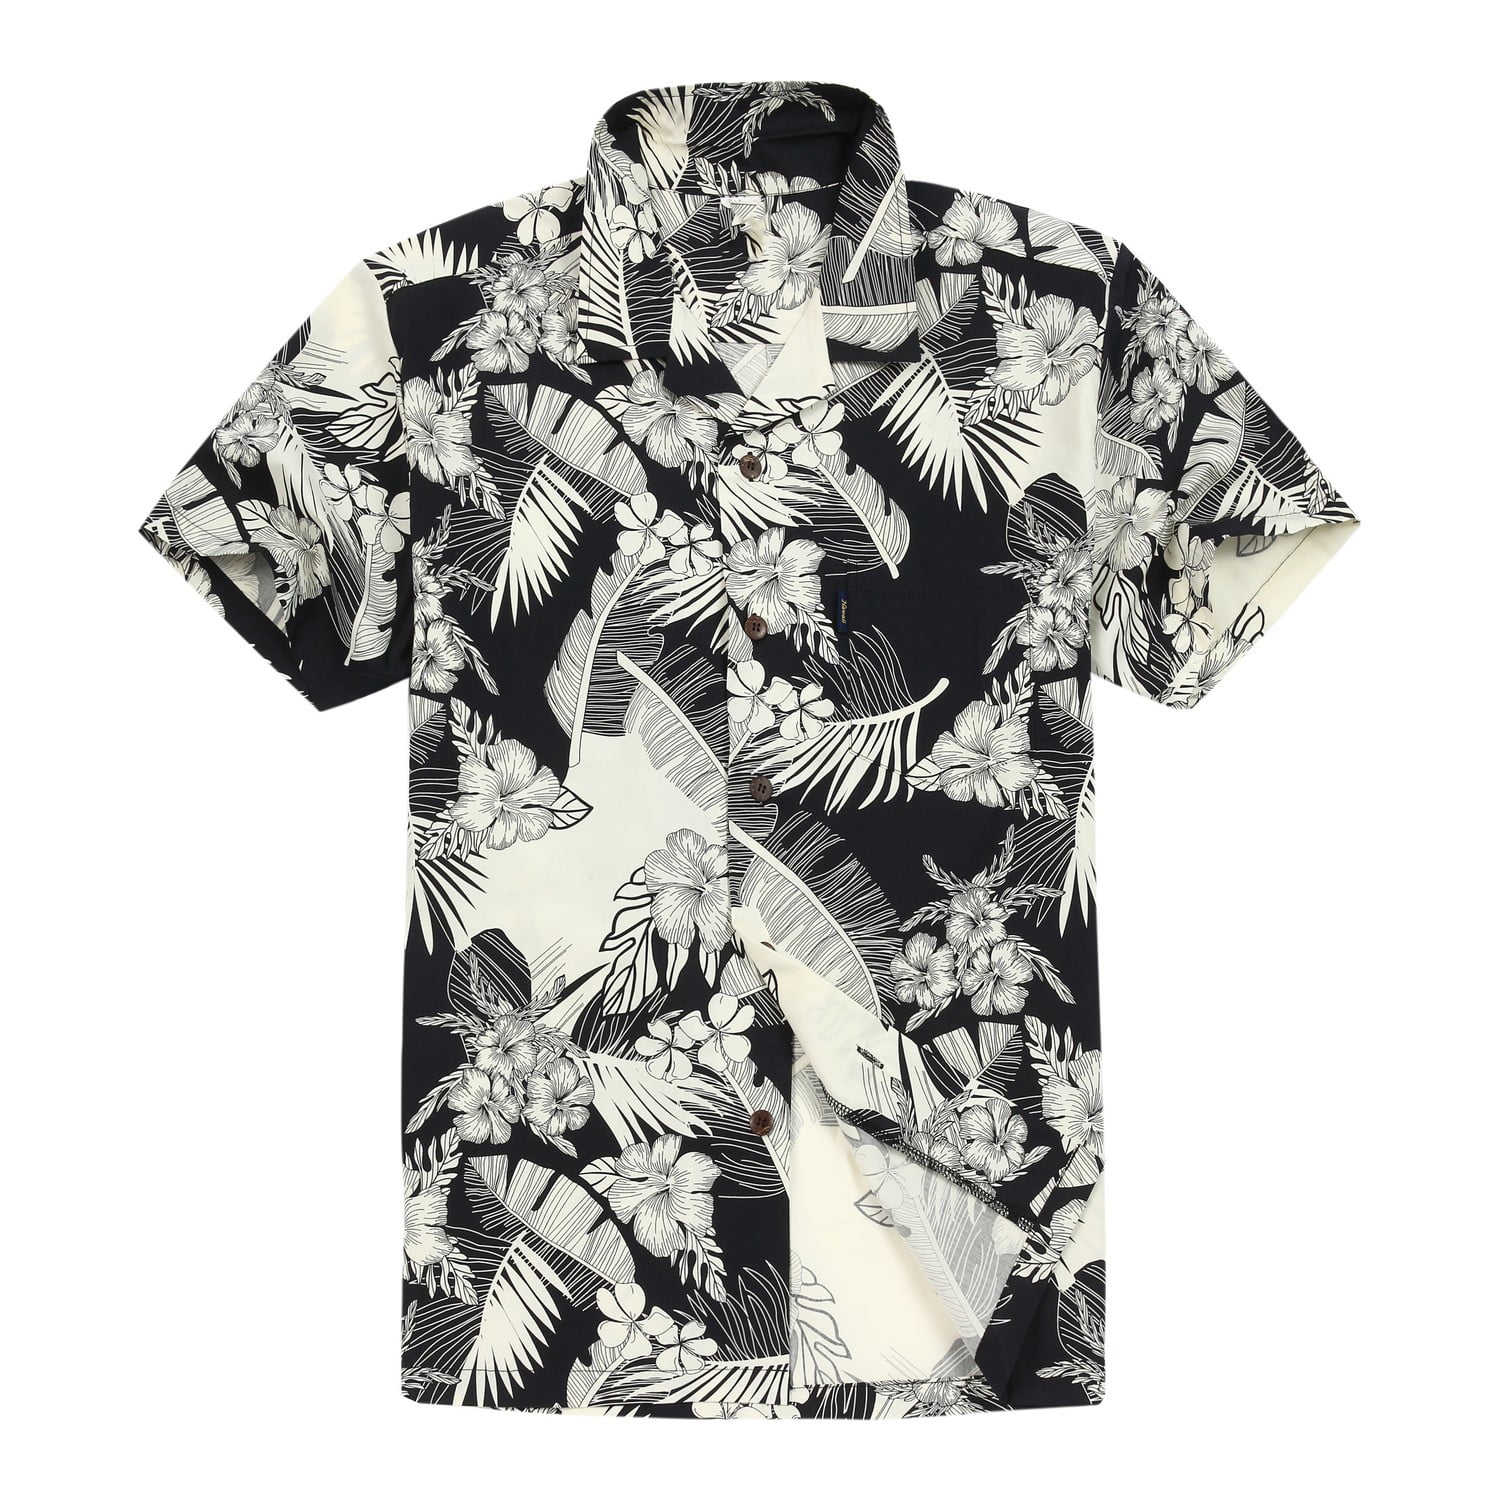 New Mens Tokyo Laundry Tarvin Palm Leaf Print Short Sleeve Shirt Size S-XL 